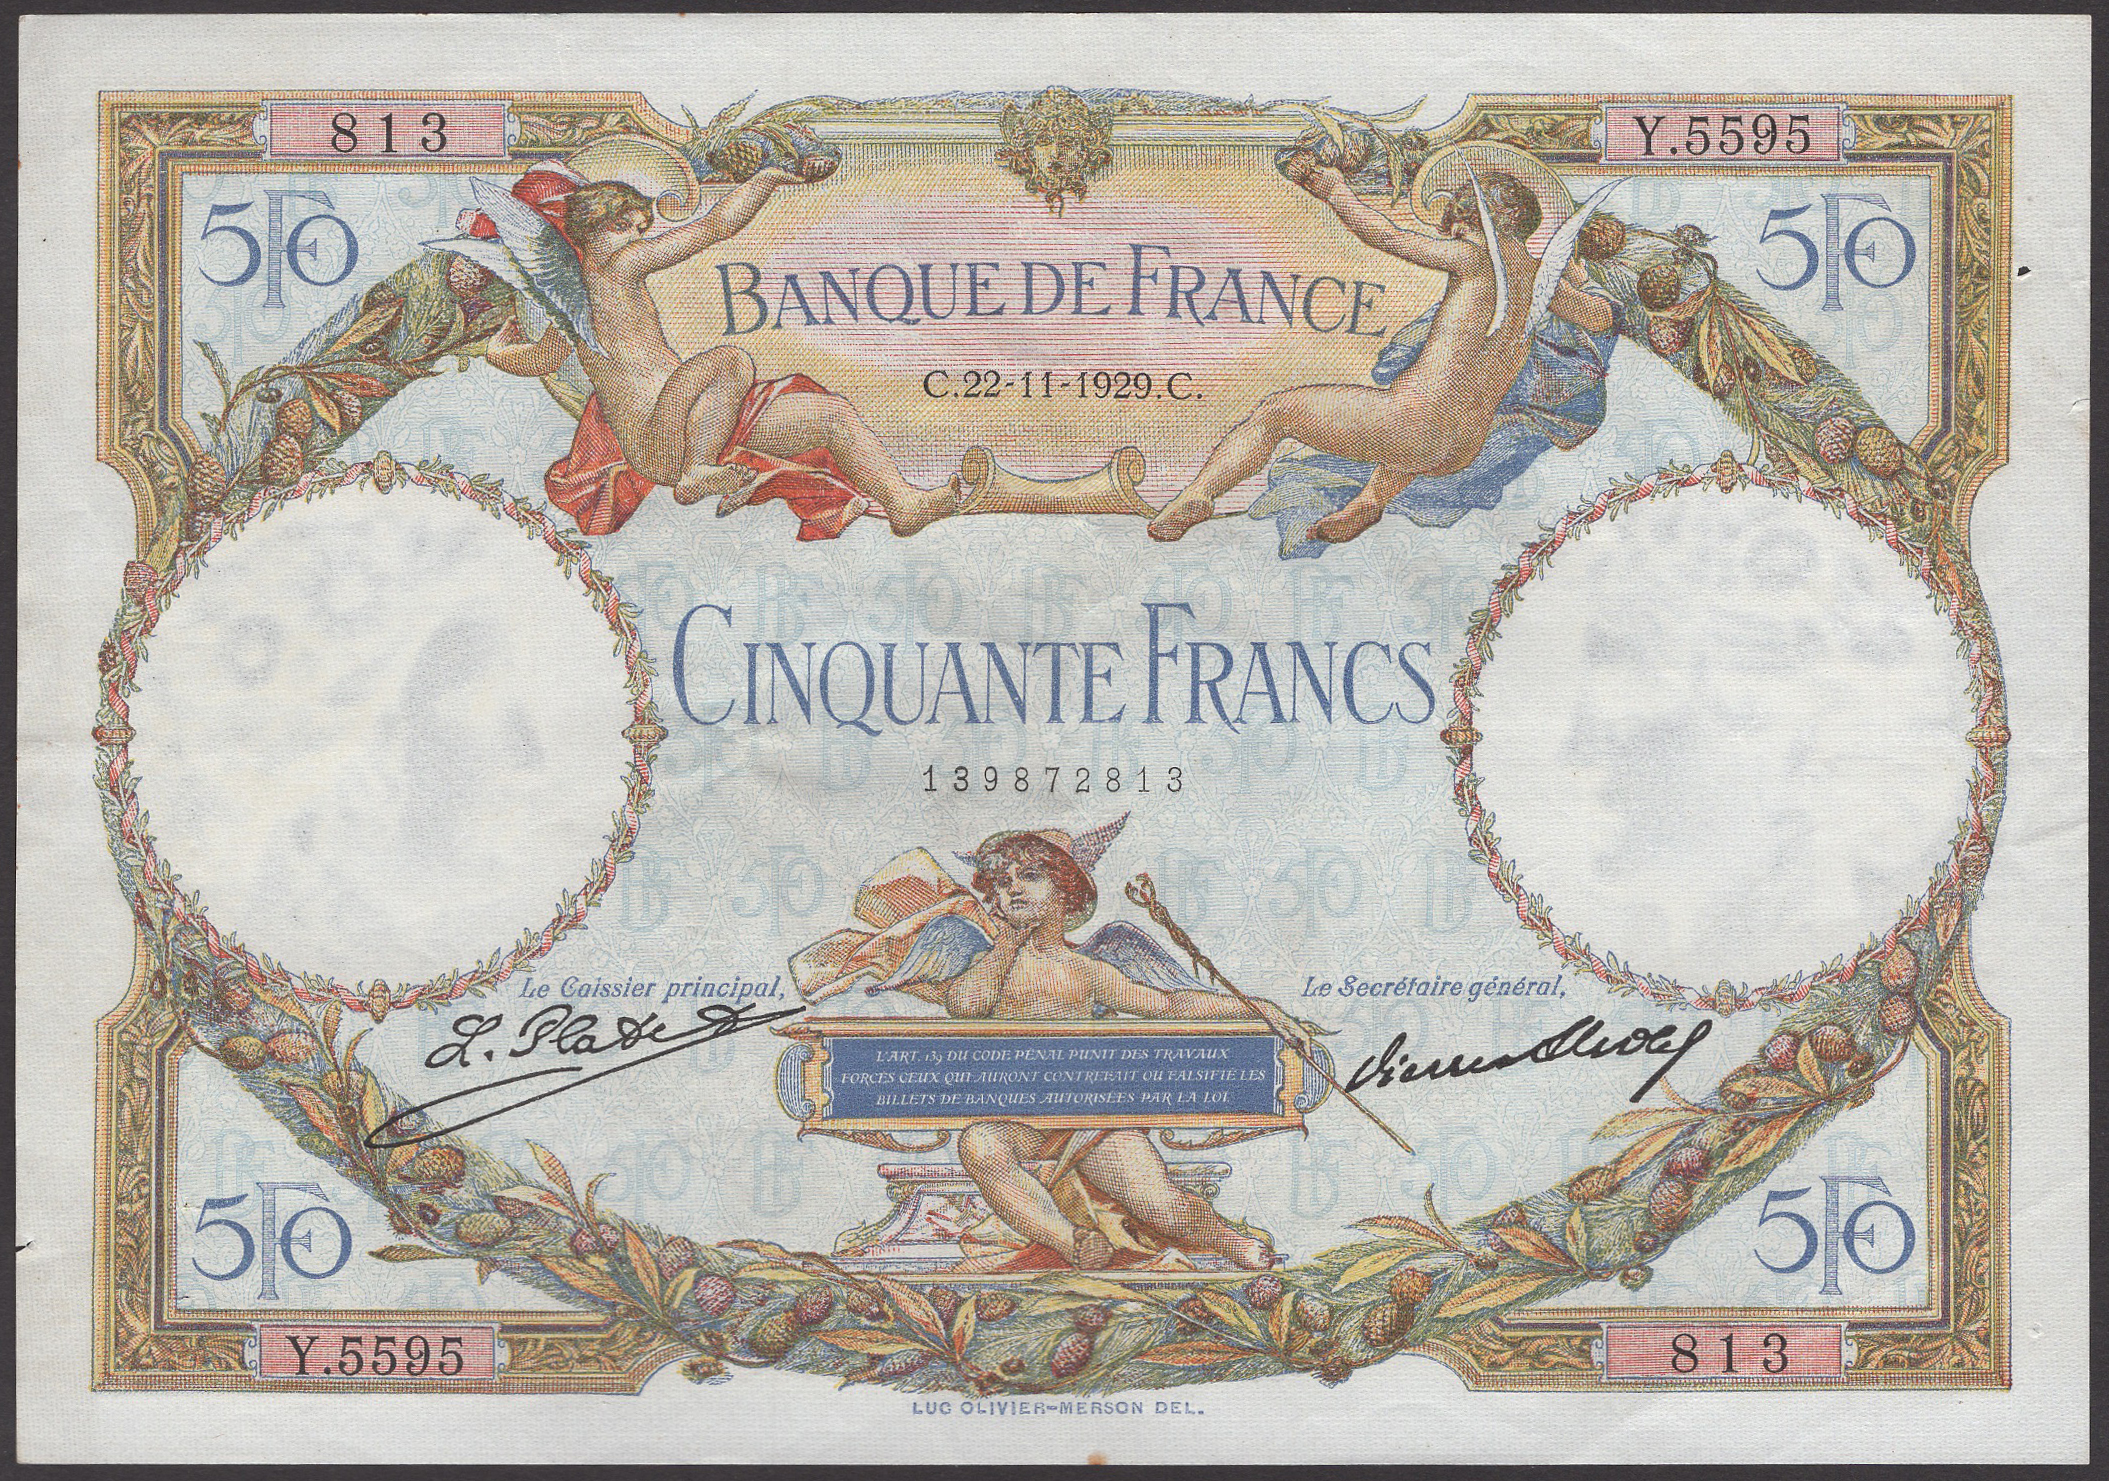 Banque de France, 50 Francs, 22 November 1929, serial number Y.5595 813, a couple of...